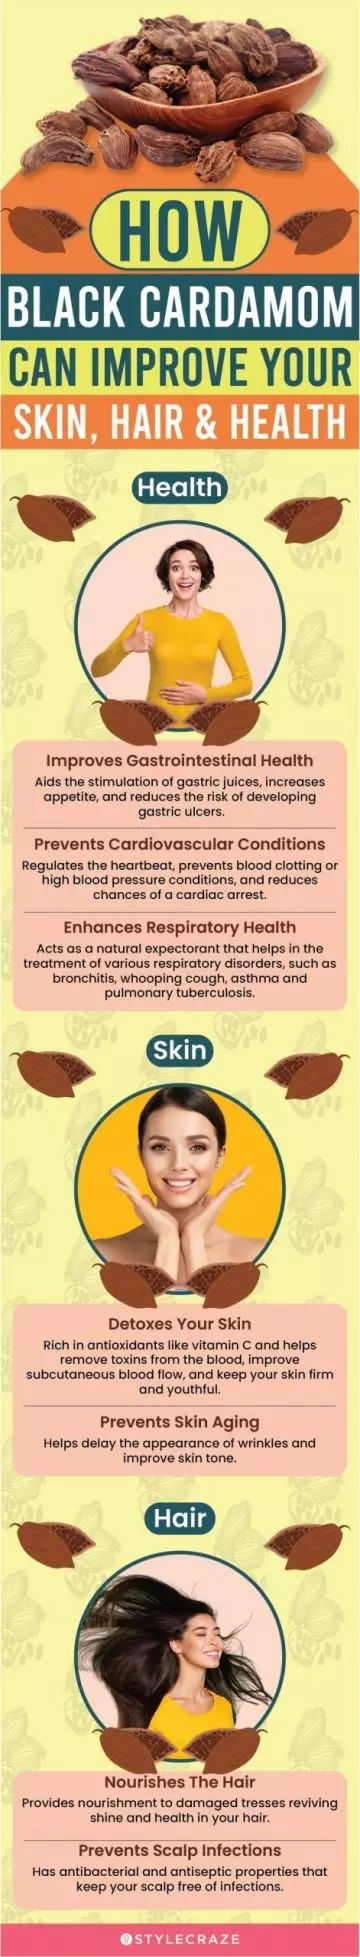 7 ways black cardamom benefits your skin, hair & health (infographic)